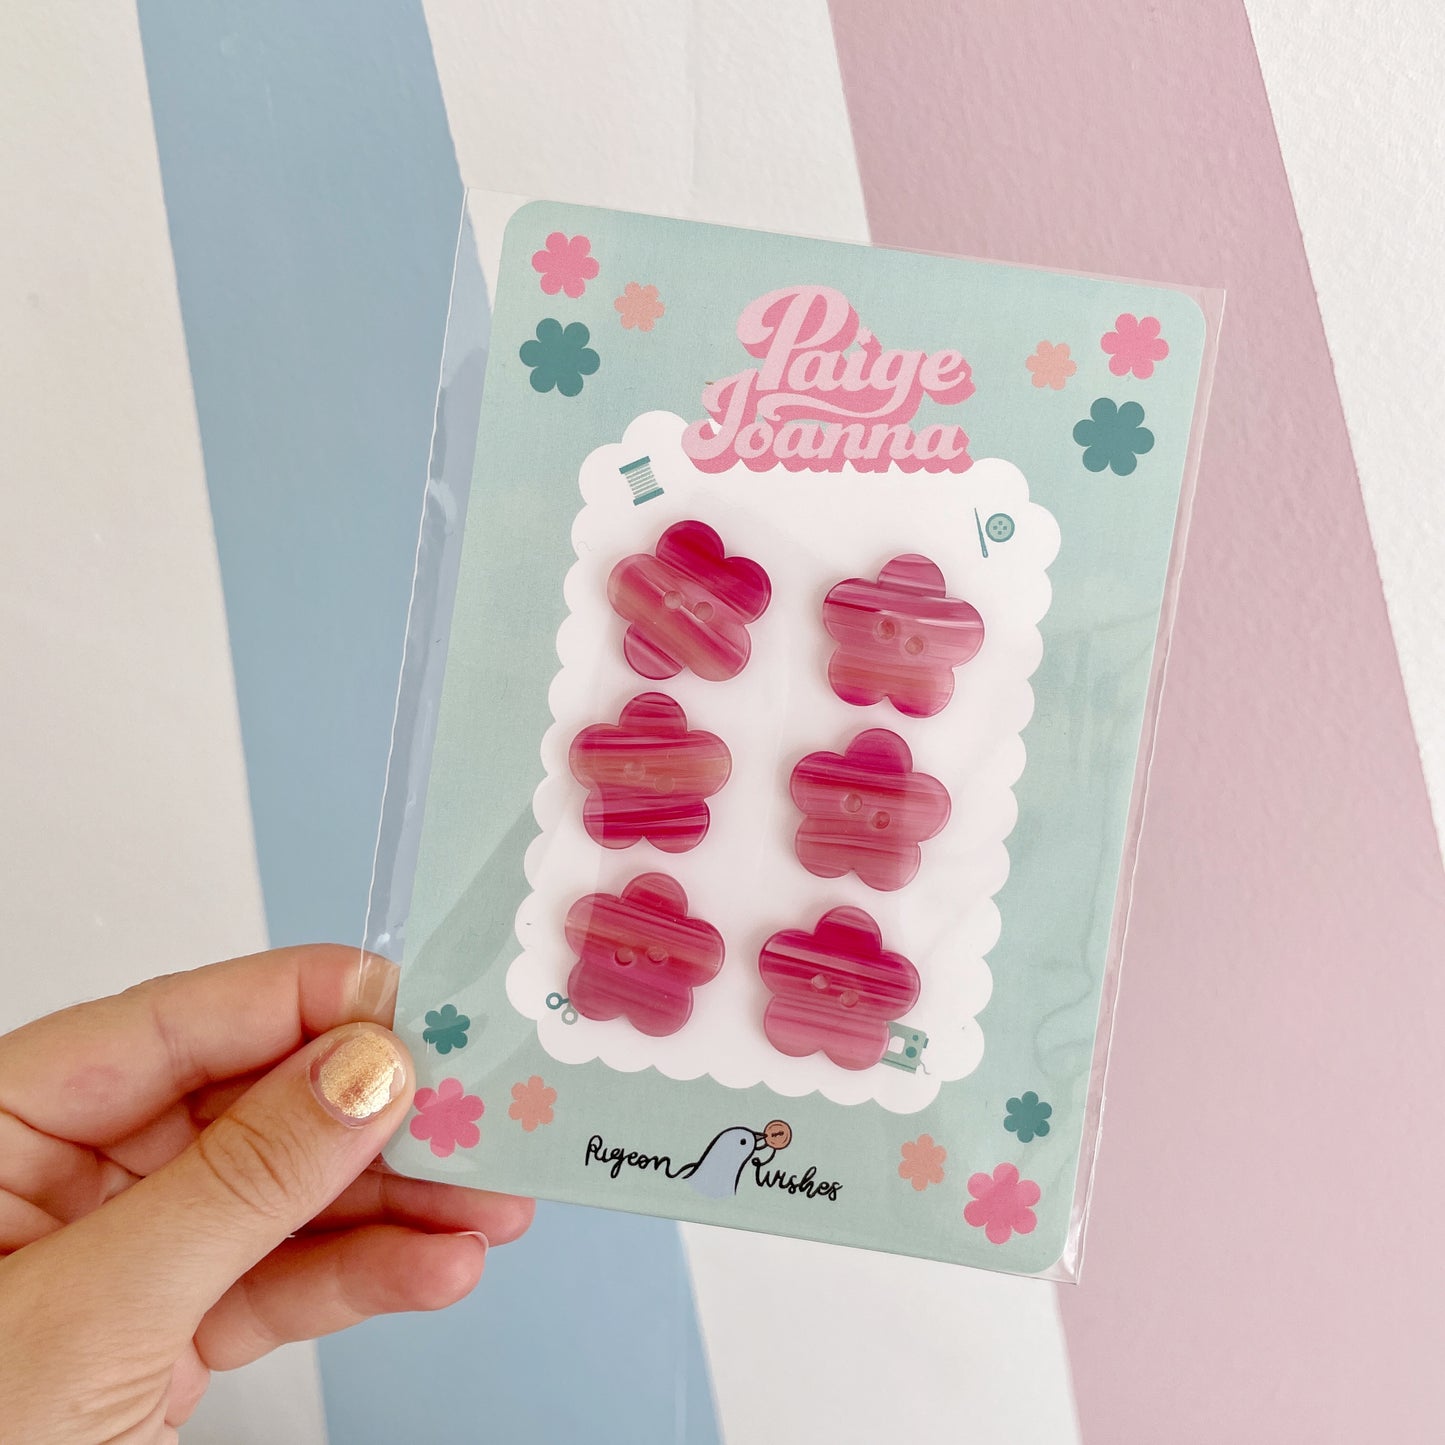 X6 Original Paige Joanna X Pigeon Wishes Blossom Flower Shape 25mm Buttons | pink stripe & ombré effect